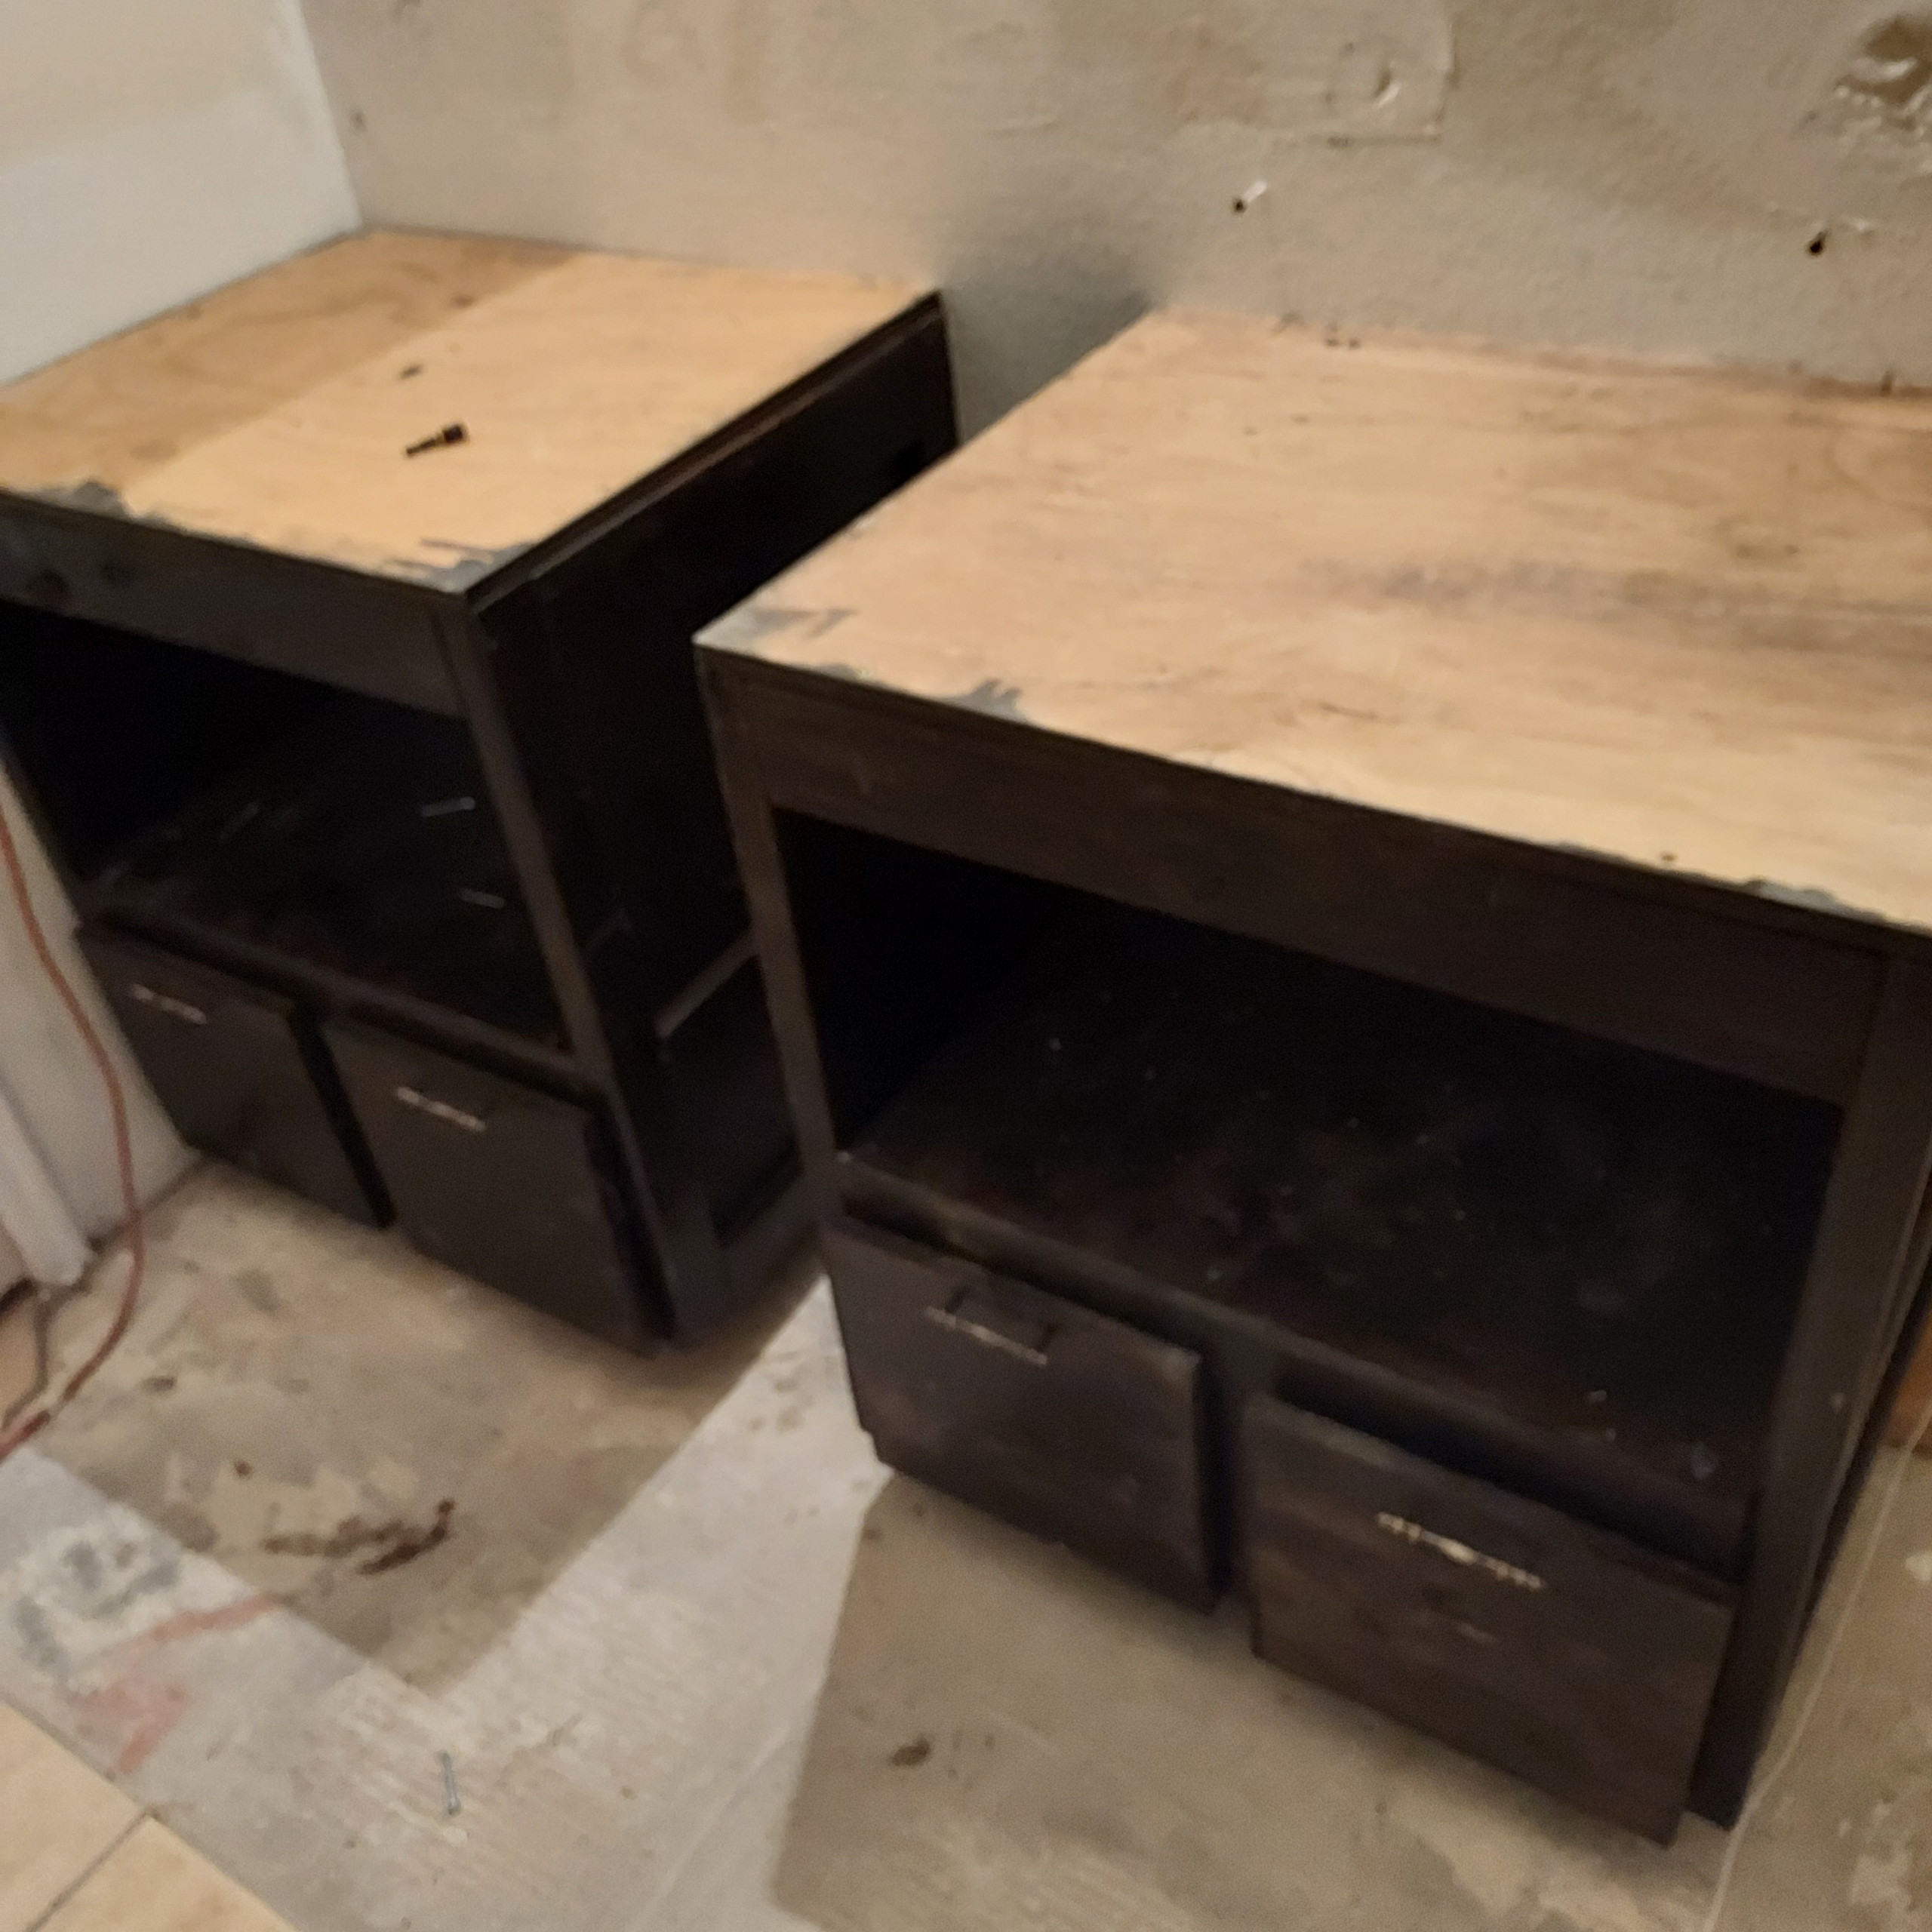 custom cabinets, copper fixtures & granite counter tops